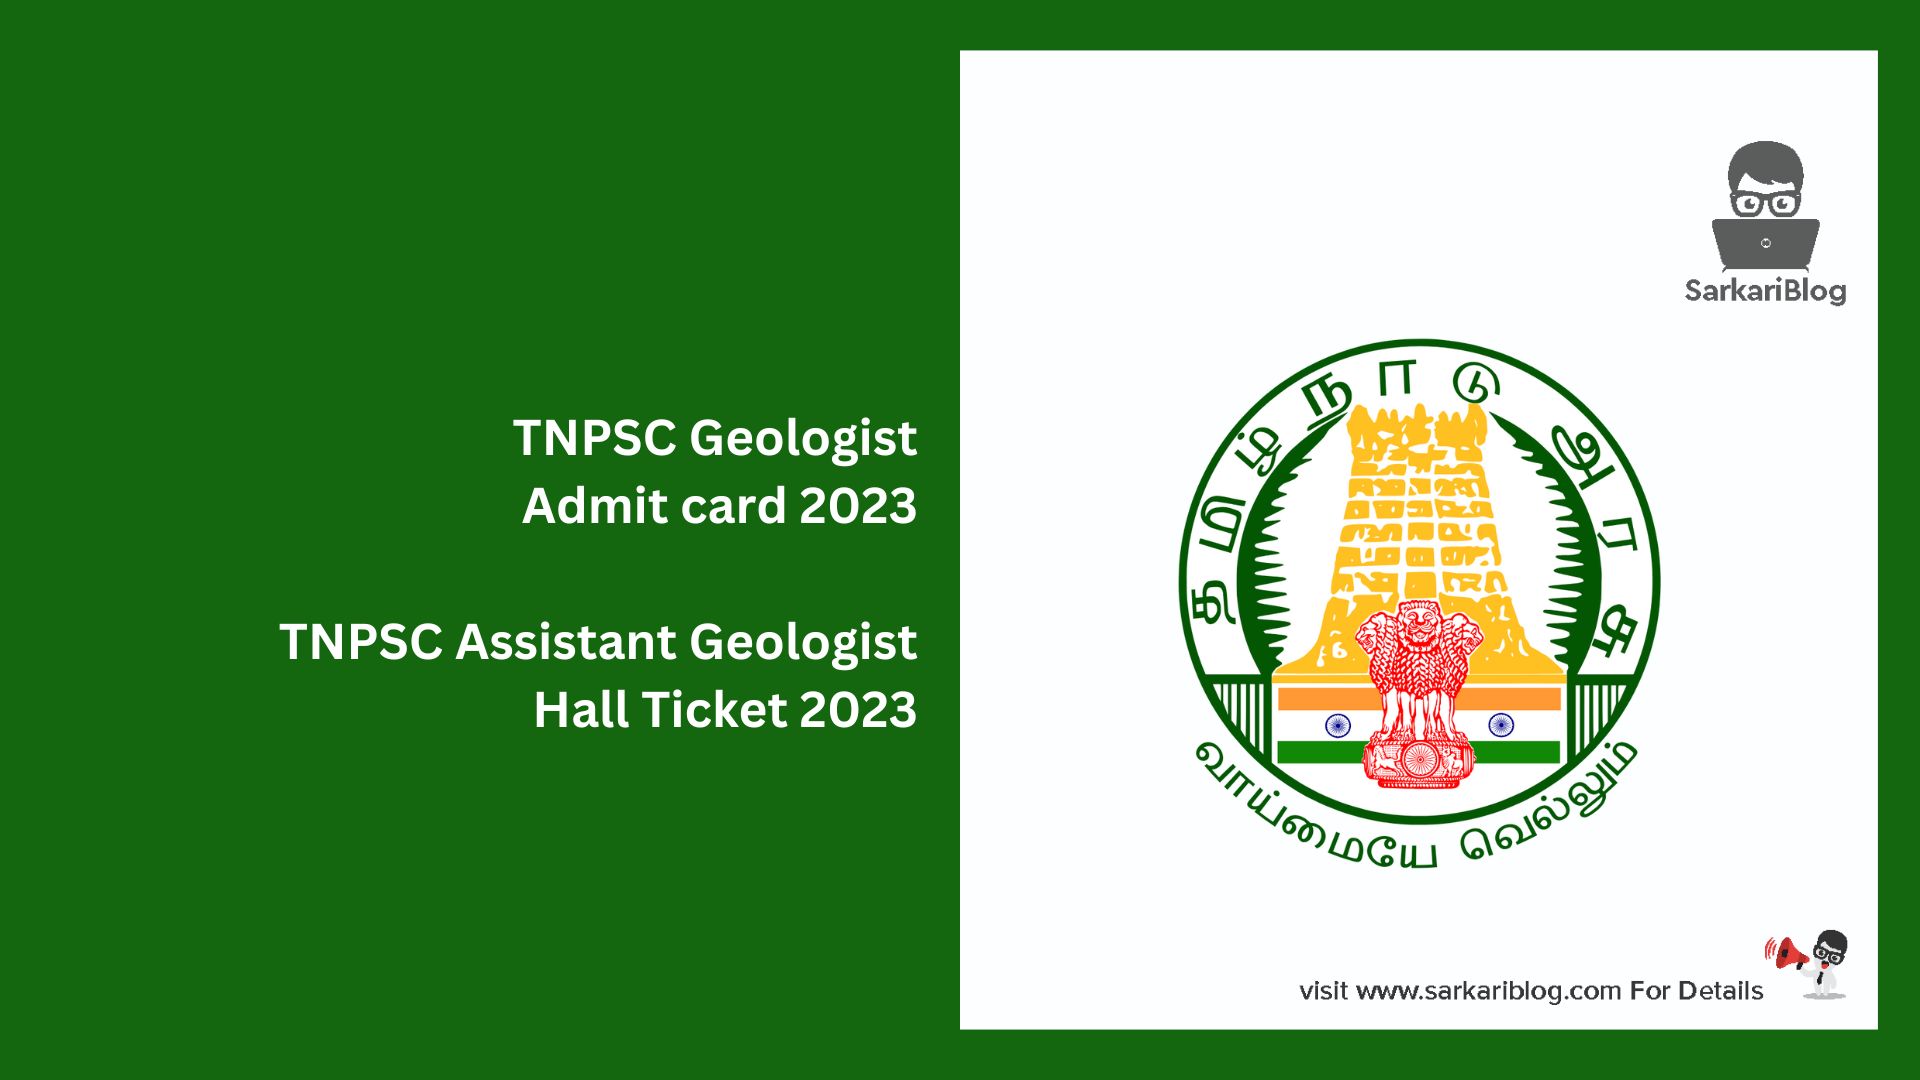 TNPSC Geologist Admit card 2023